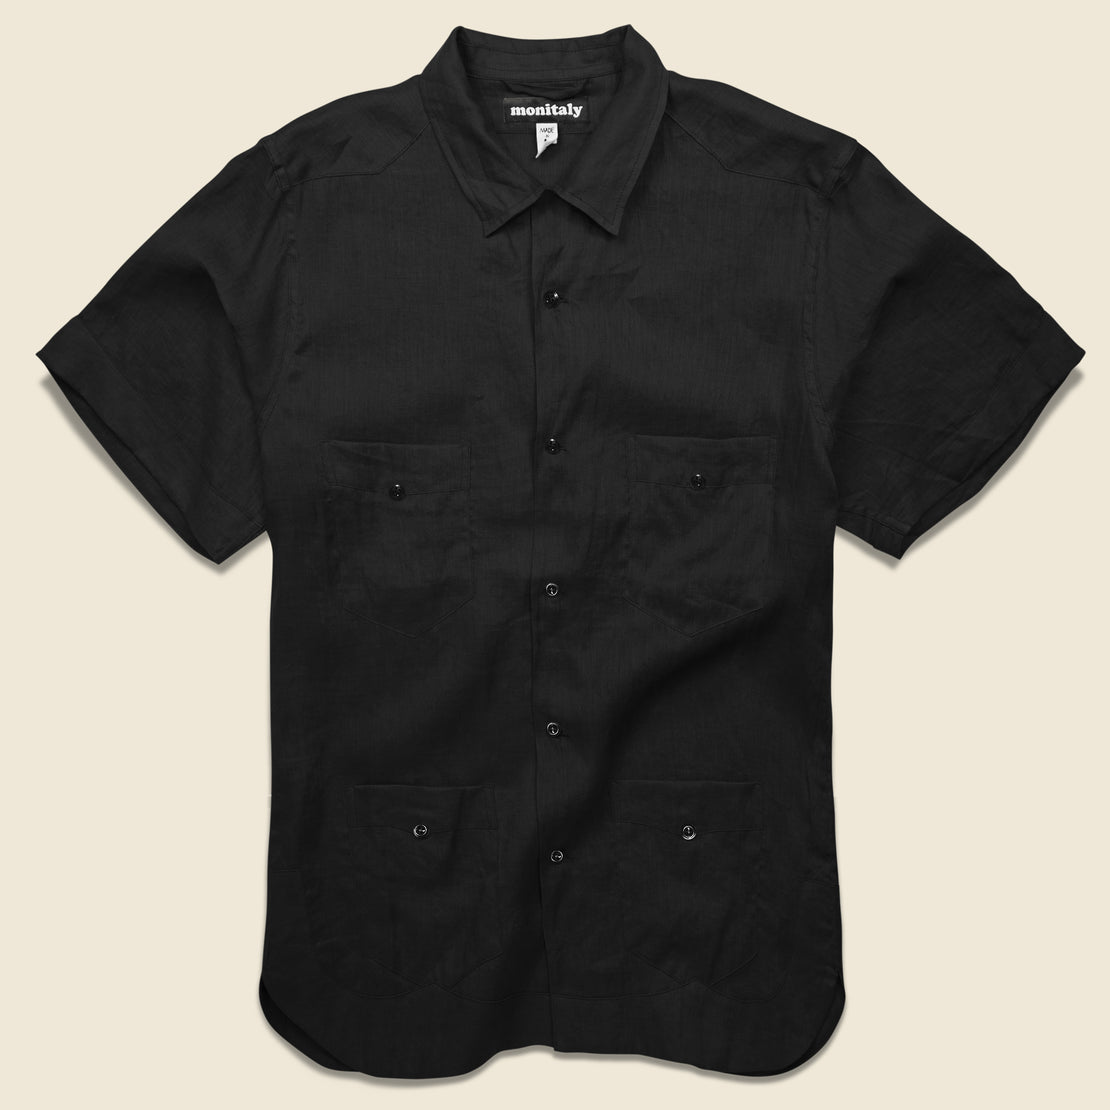 Monitaly Linen Guayabera Shirt - Black